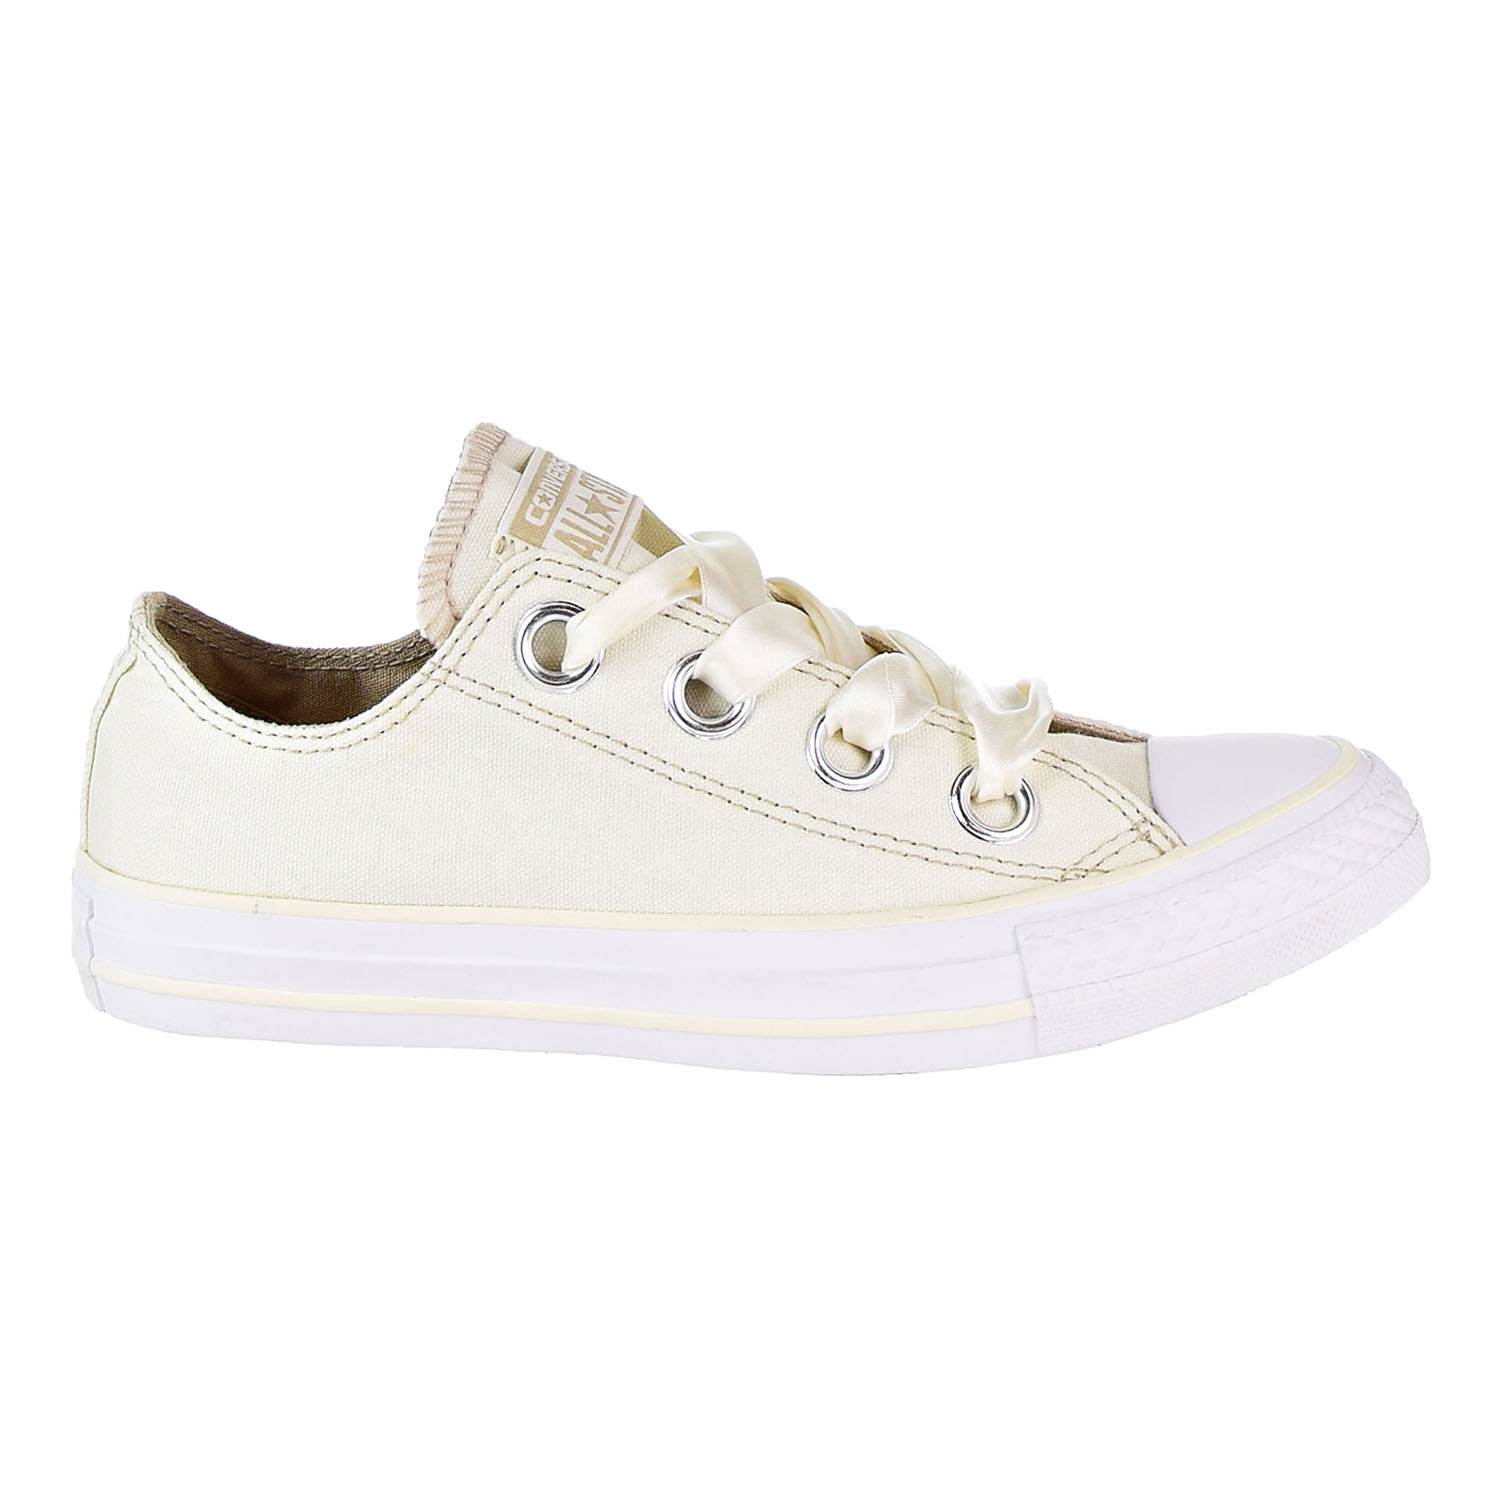 Shoes Egret-White 559919C 